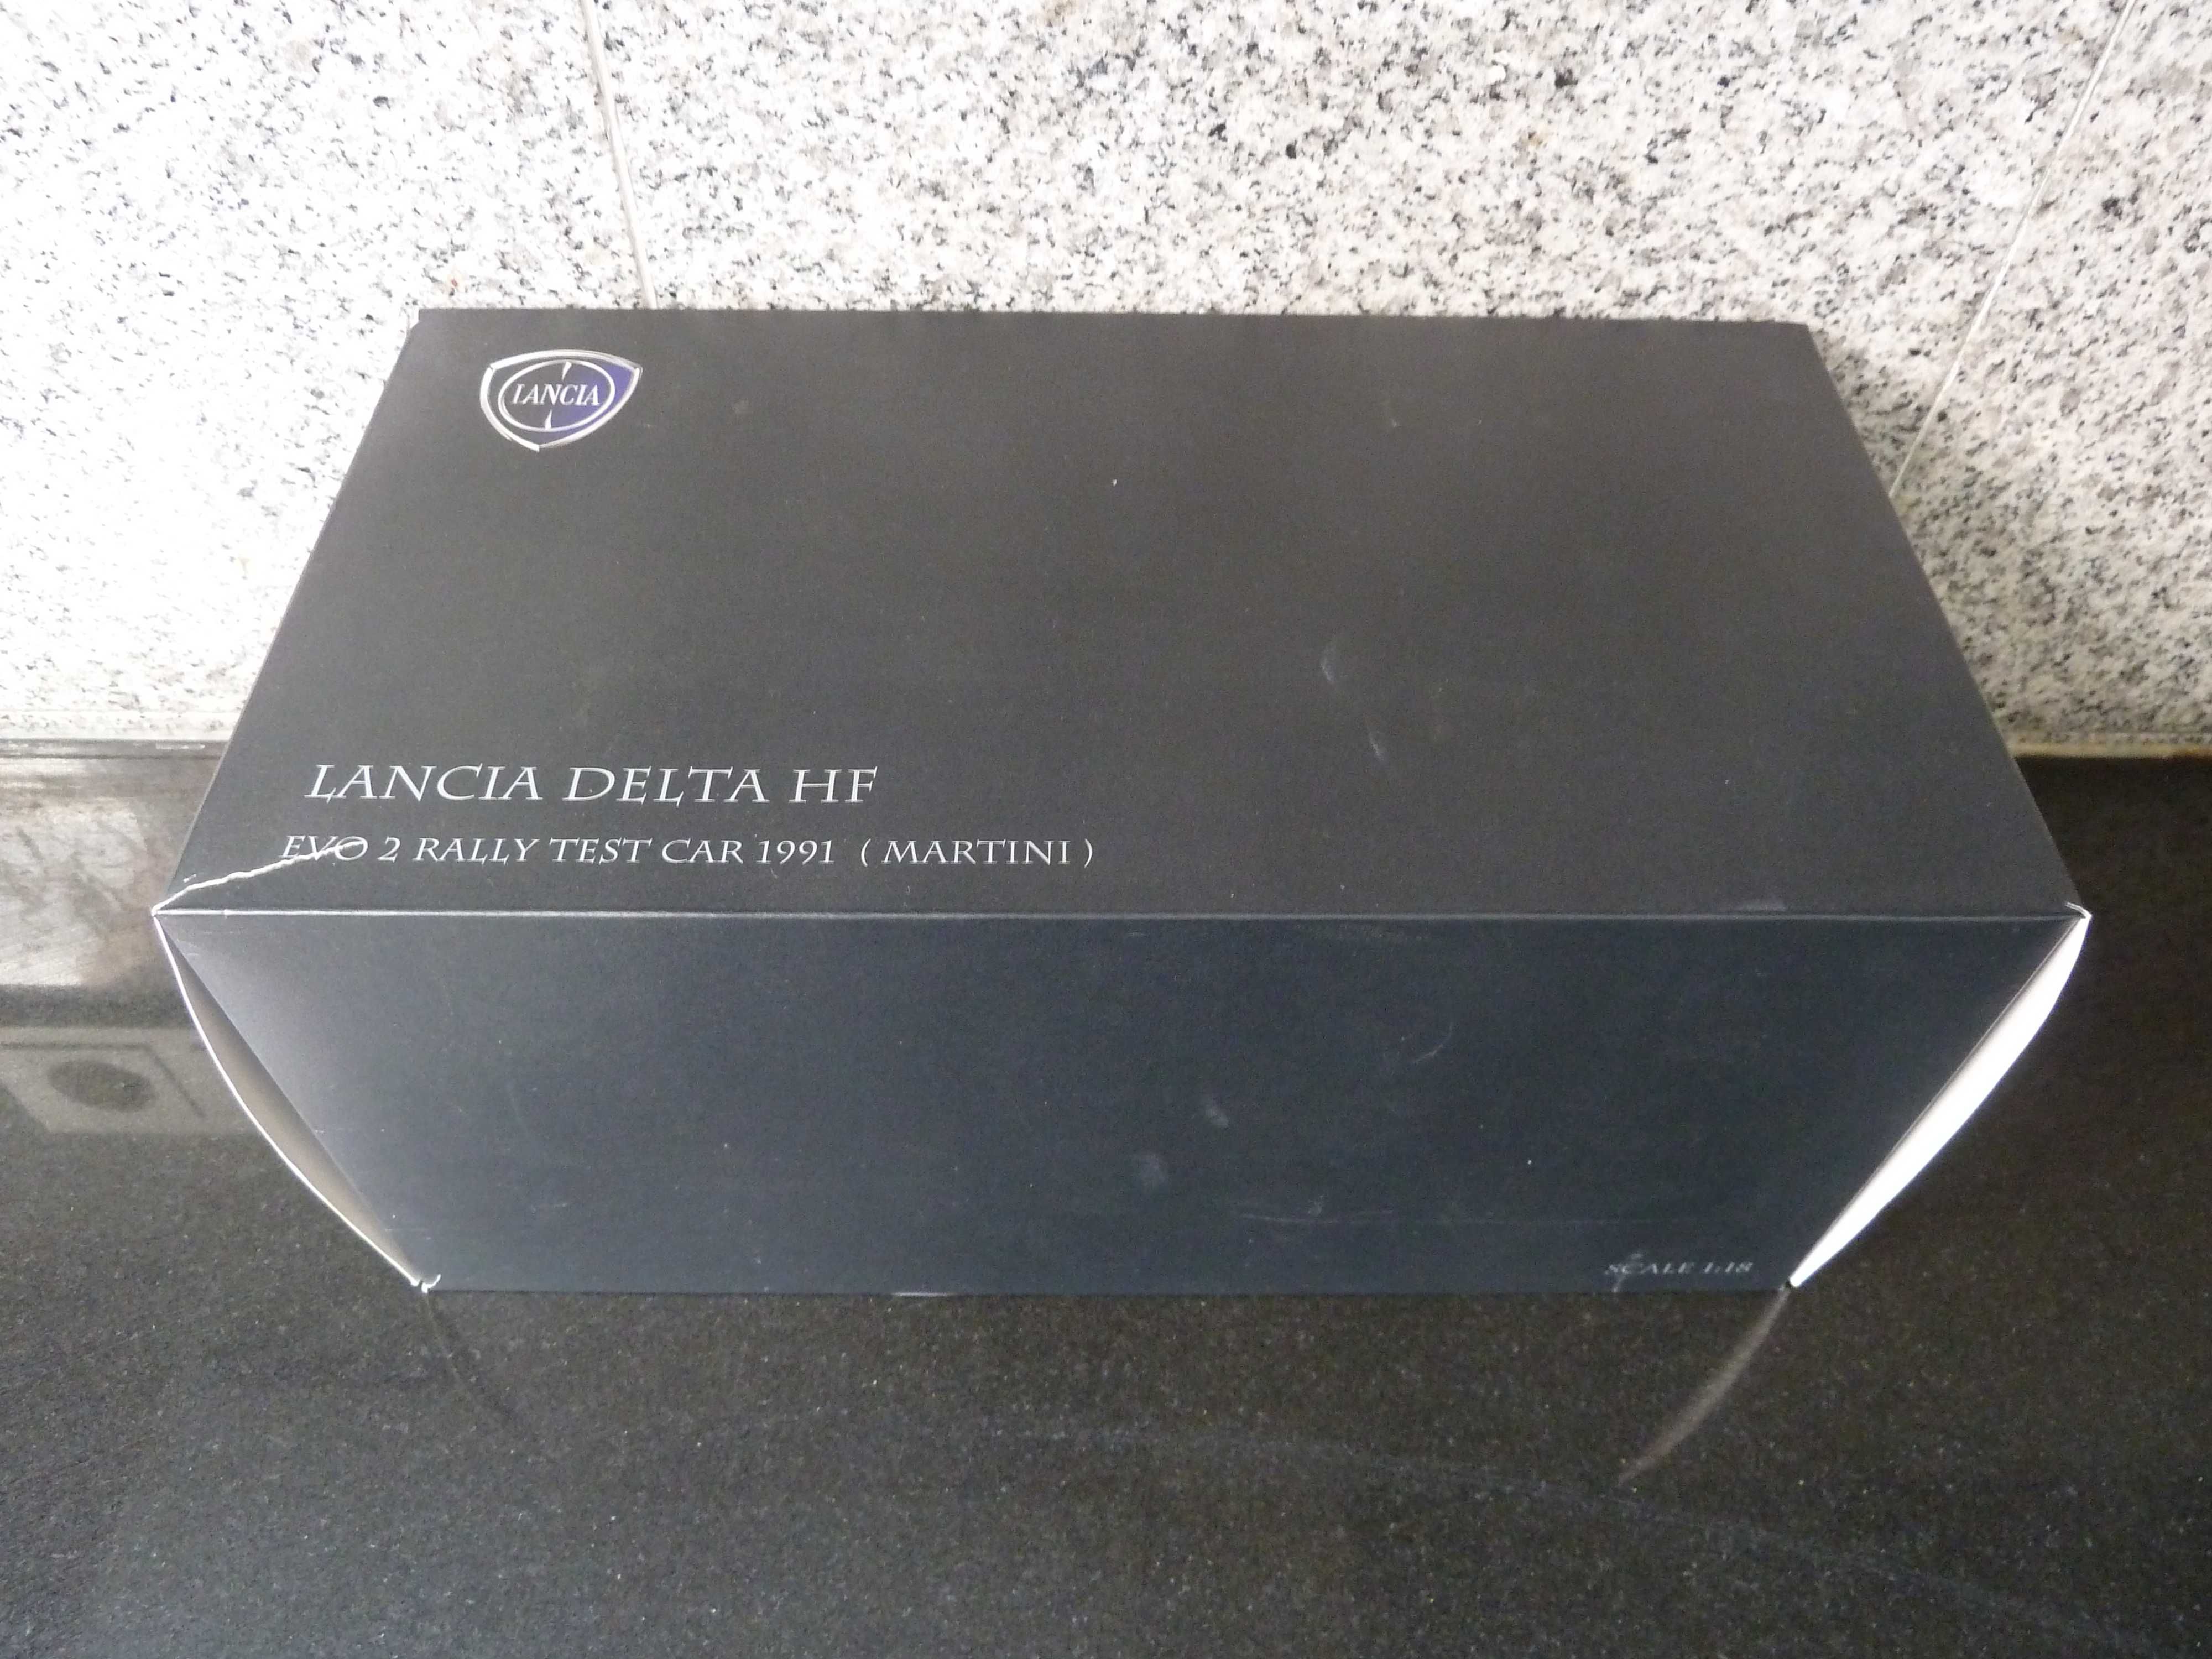 1:18 Kyosho, Lancia Delta HF Evo2 Test Car Martini AutoArt Minichamps